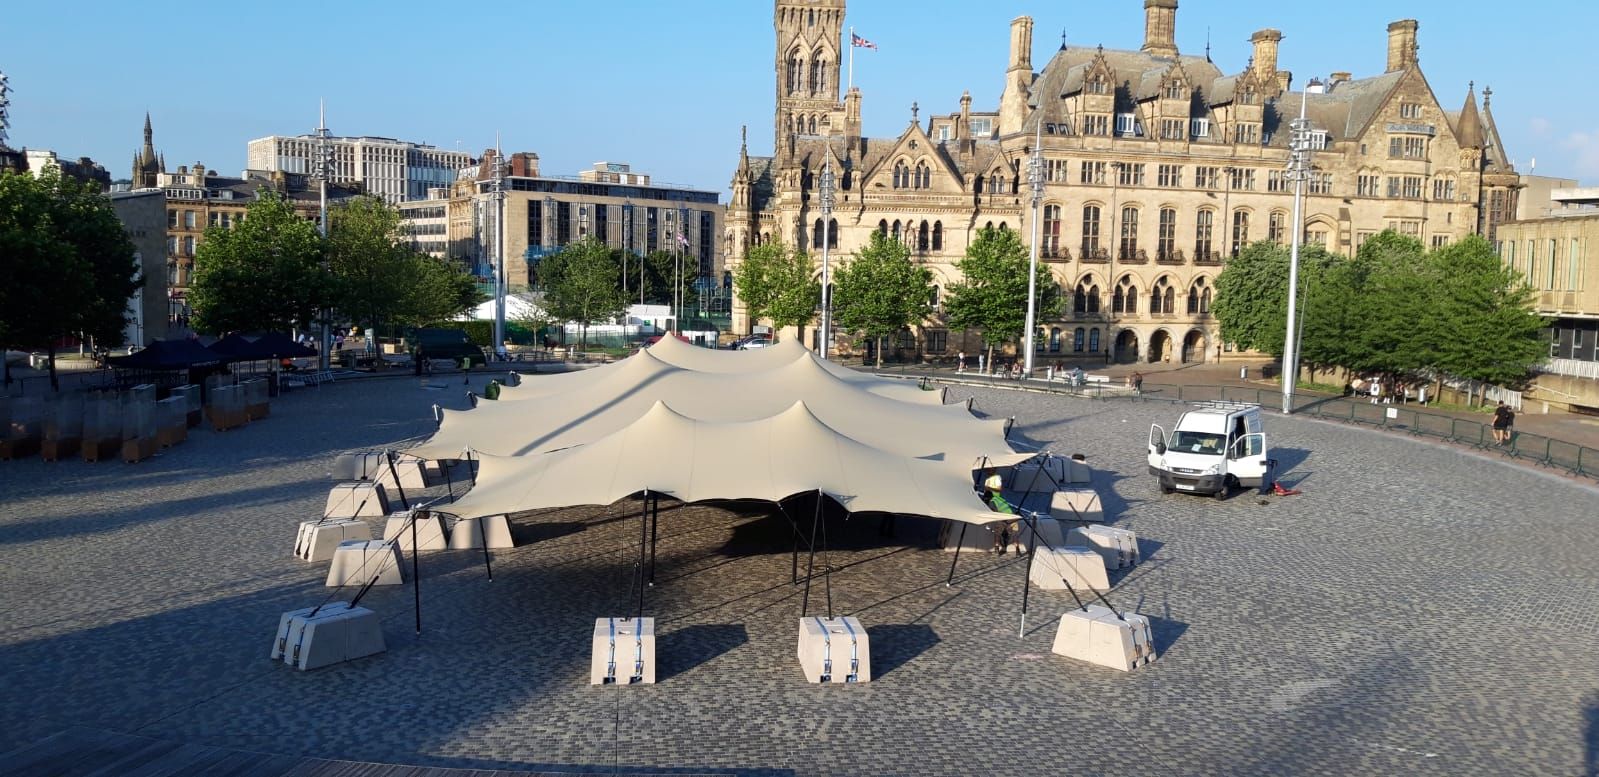 Stretch Tent on Hardstanding, Centenary Square Bradford